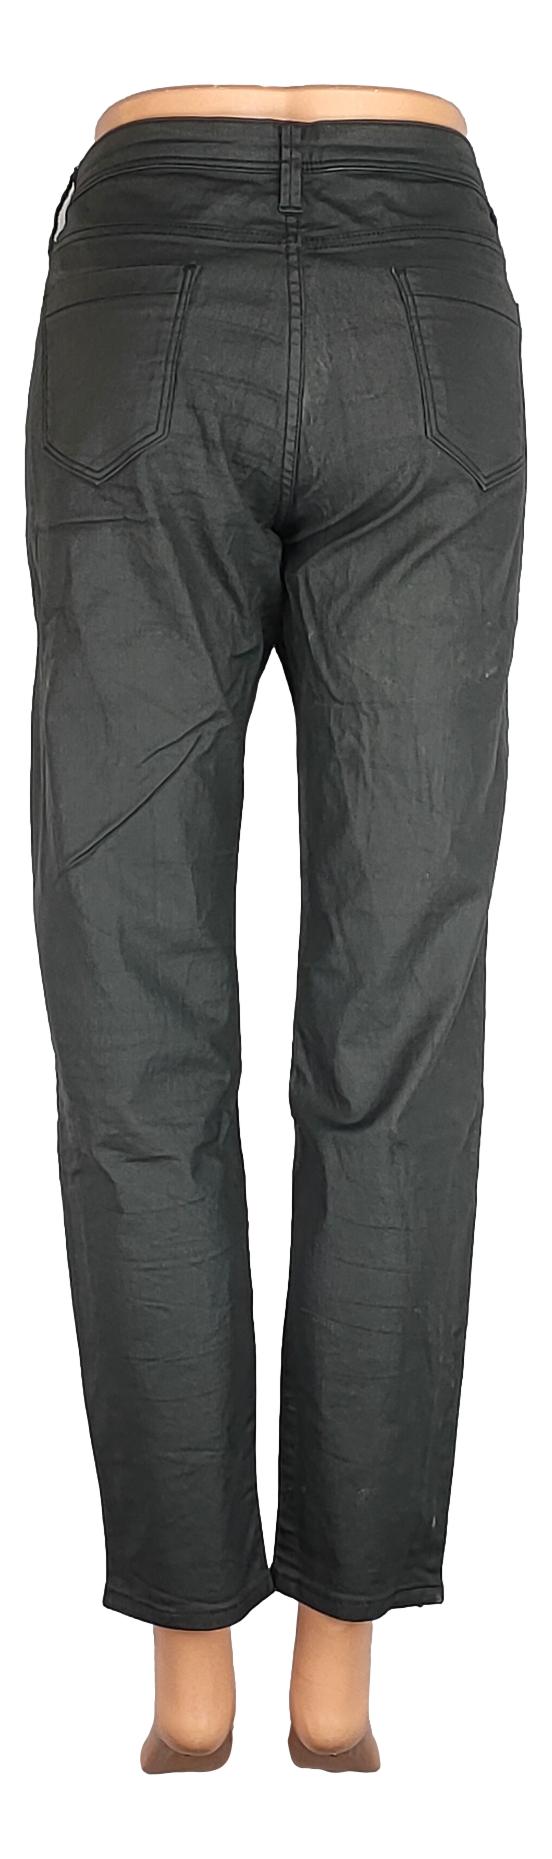 Pantalon Promod - taille 40